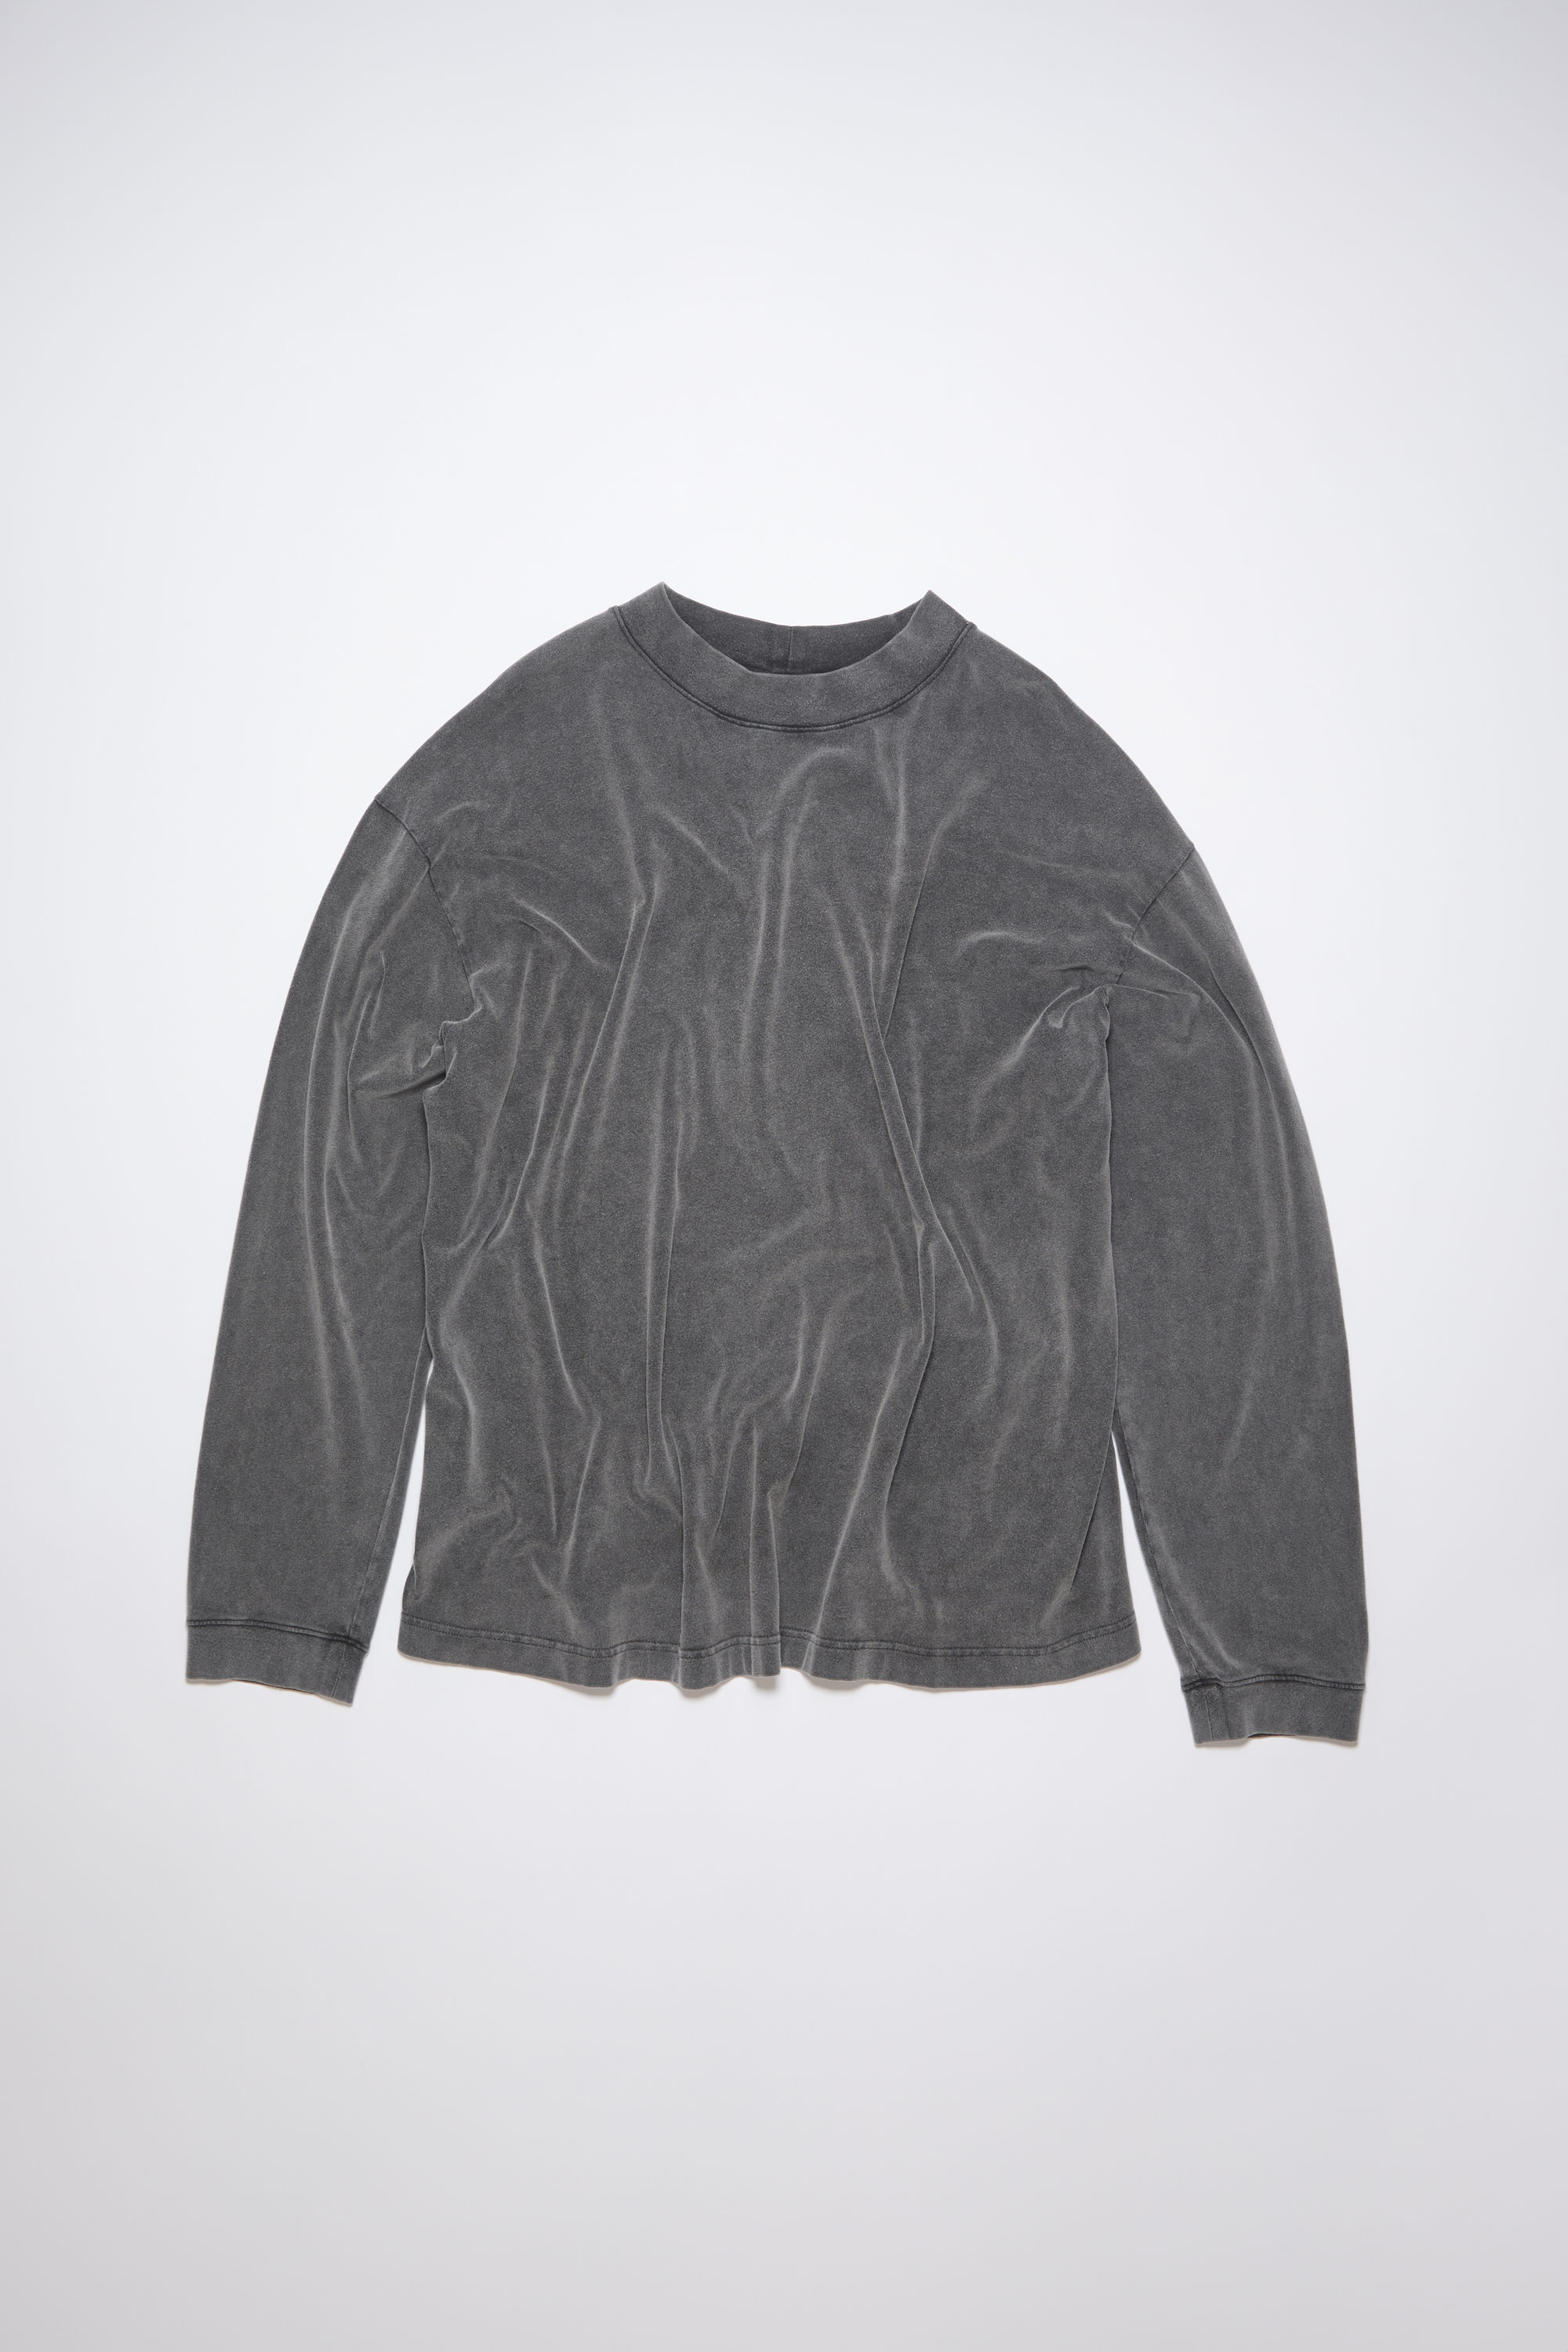 Acne Studios - Crew neck sweater - Faded black